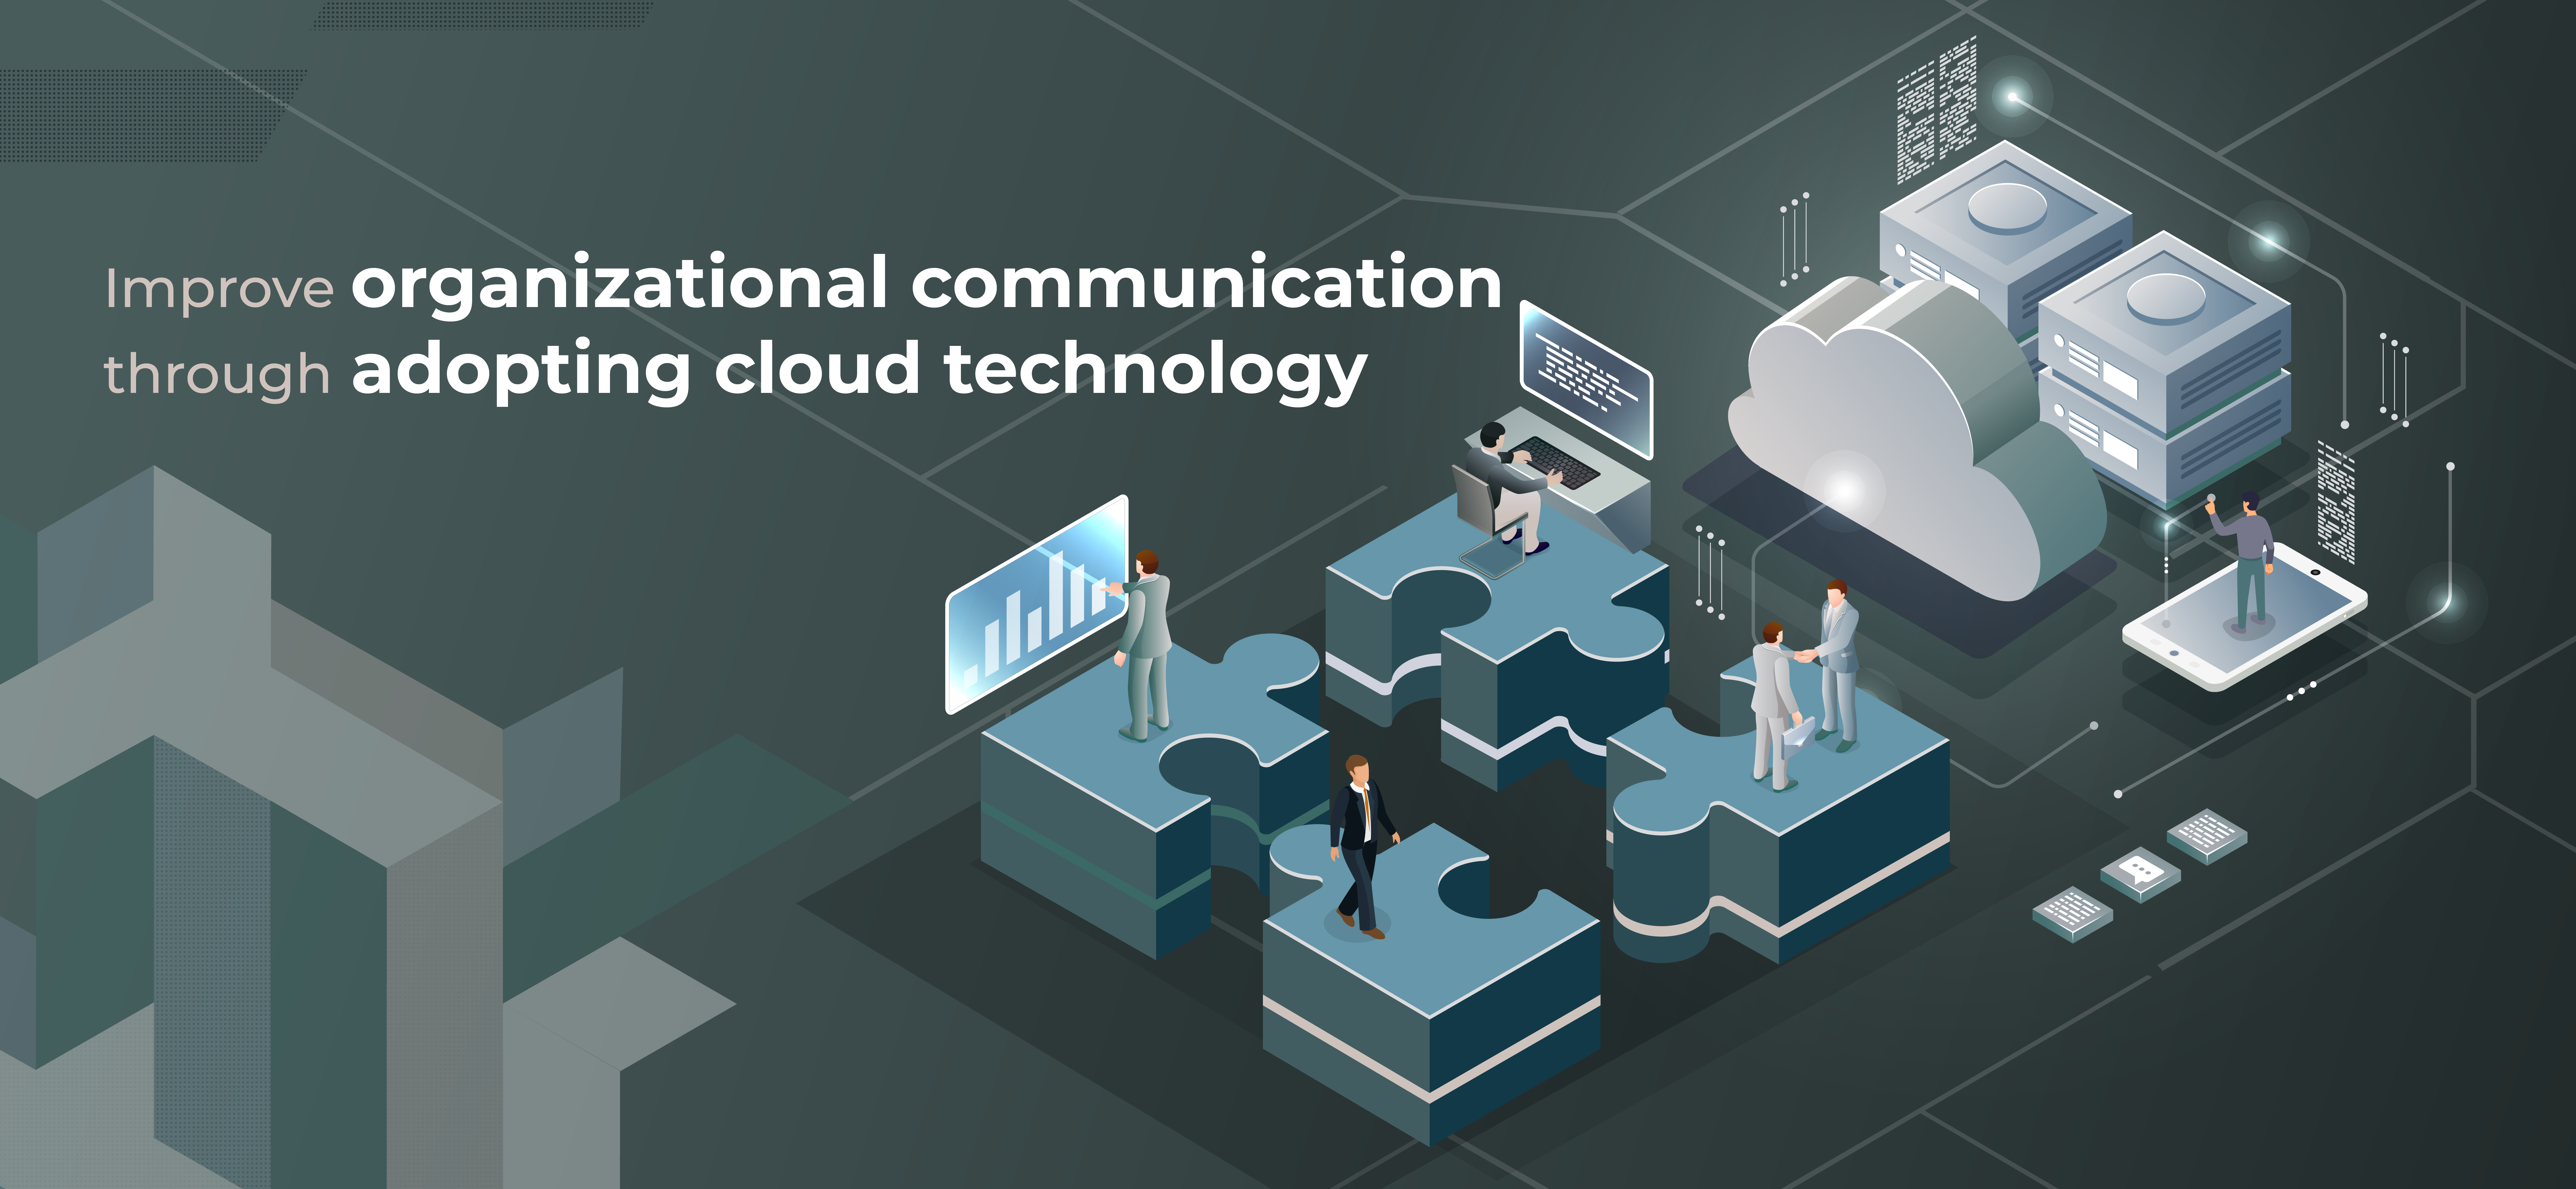 167337483620-Improve-organizational-communication-through-adopting-cloud-technology.png